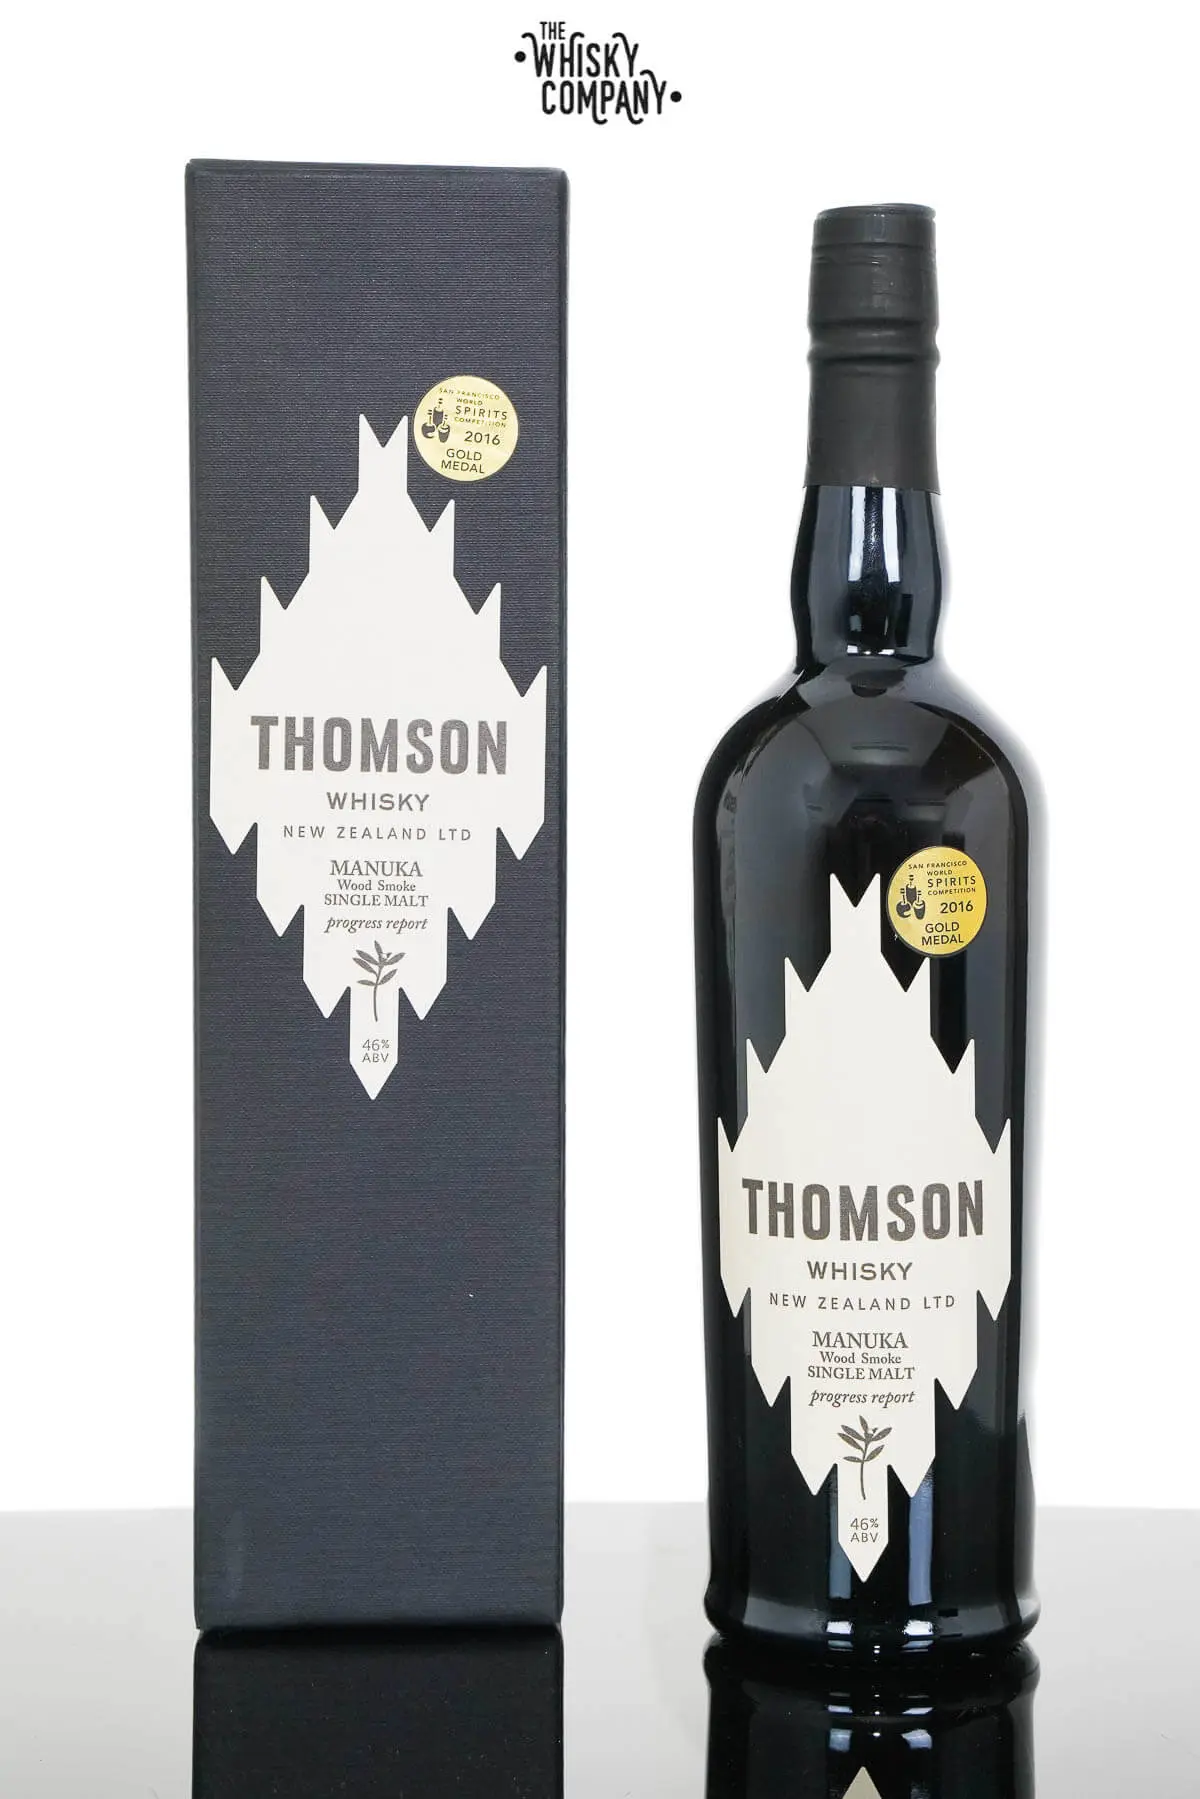 thomson manuka smoked whisky - Where is Thomson whisky made